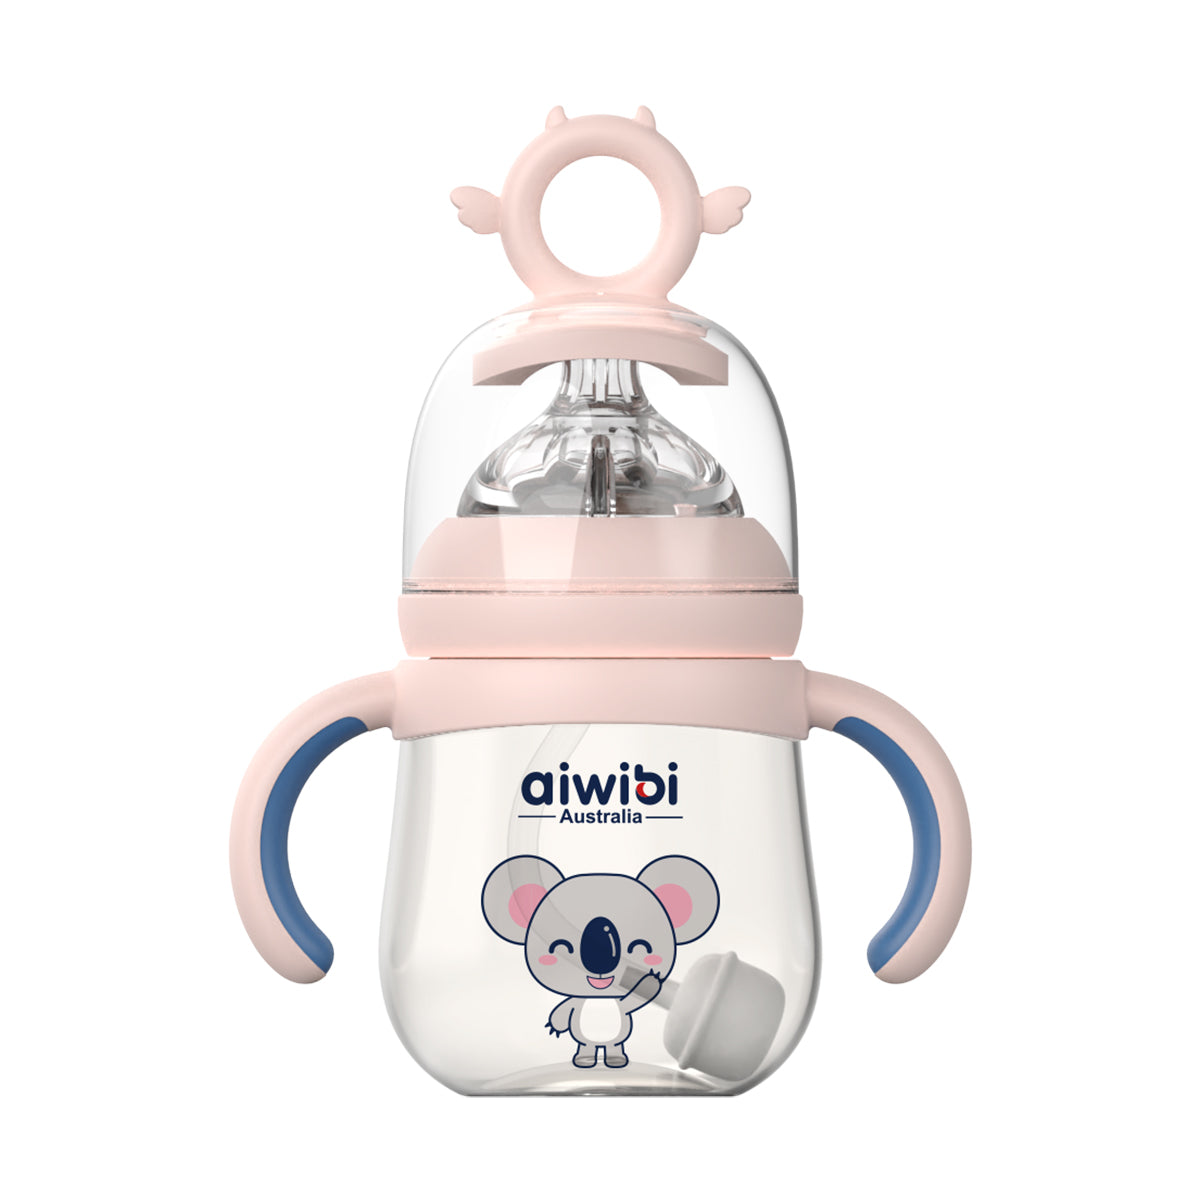 BPA-FREE Baby Feeding Bottle with Flexible Straw Design Allow 360° Drinking 180ml